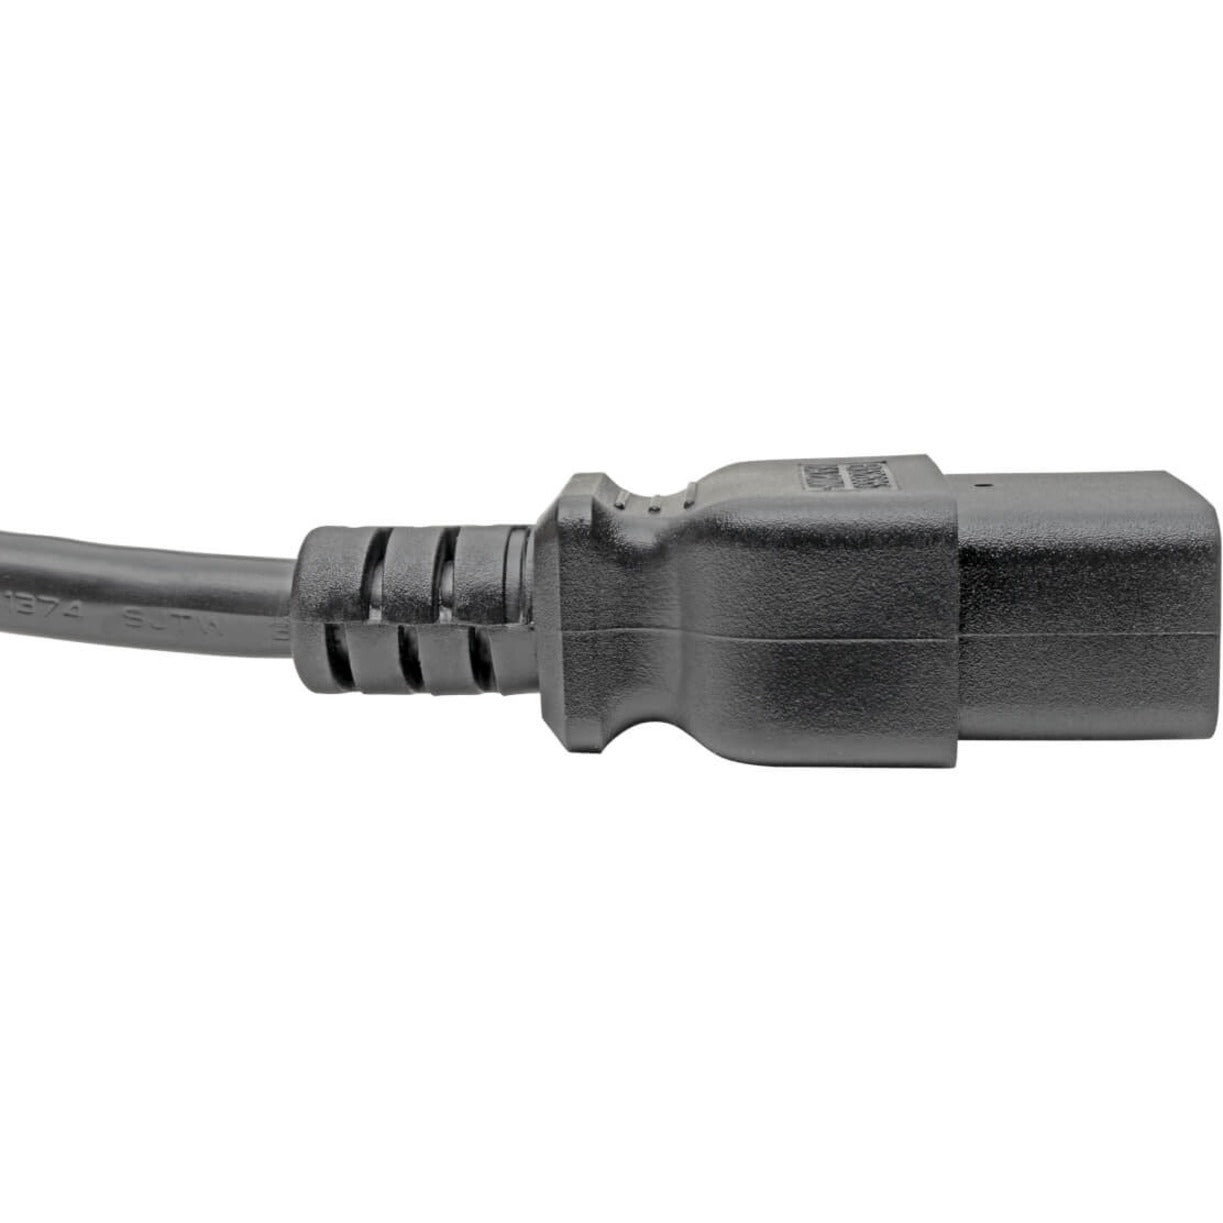 Tripp Lite P036-010 10-ft. Heavy Duty Power Cord, 20A, 250V AC, IEC-320-C19 to IEC-320-C20, Black